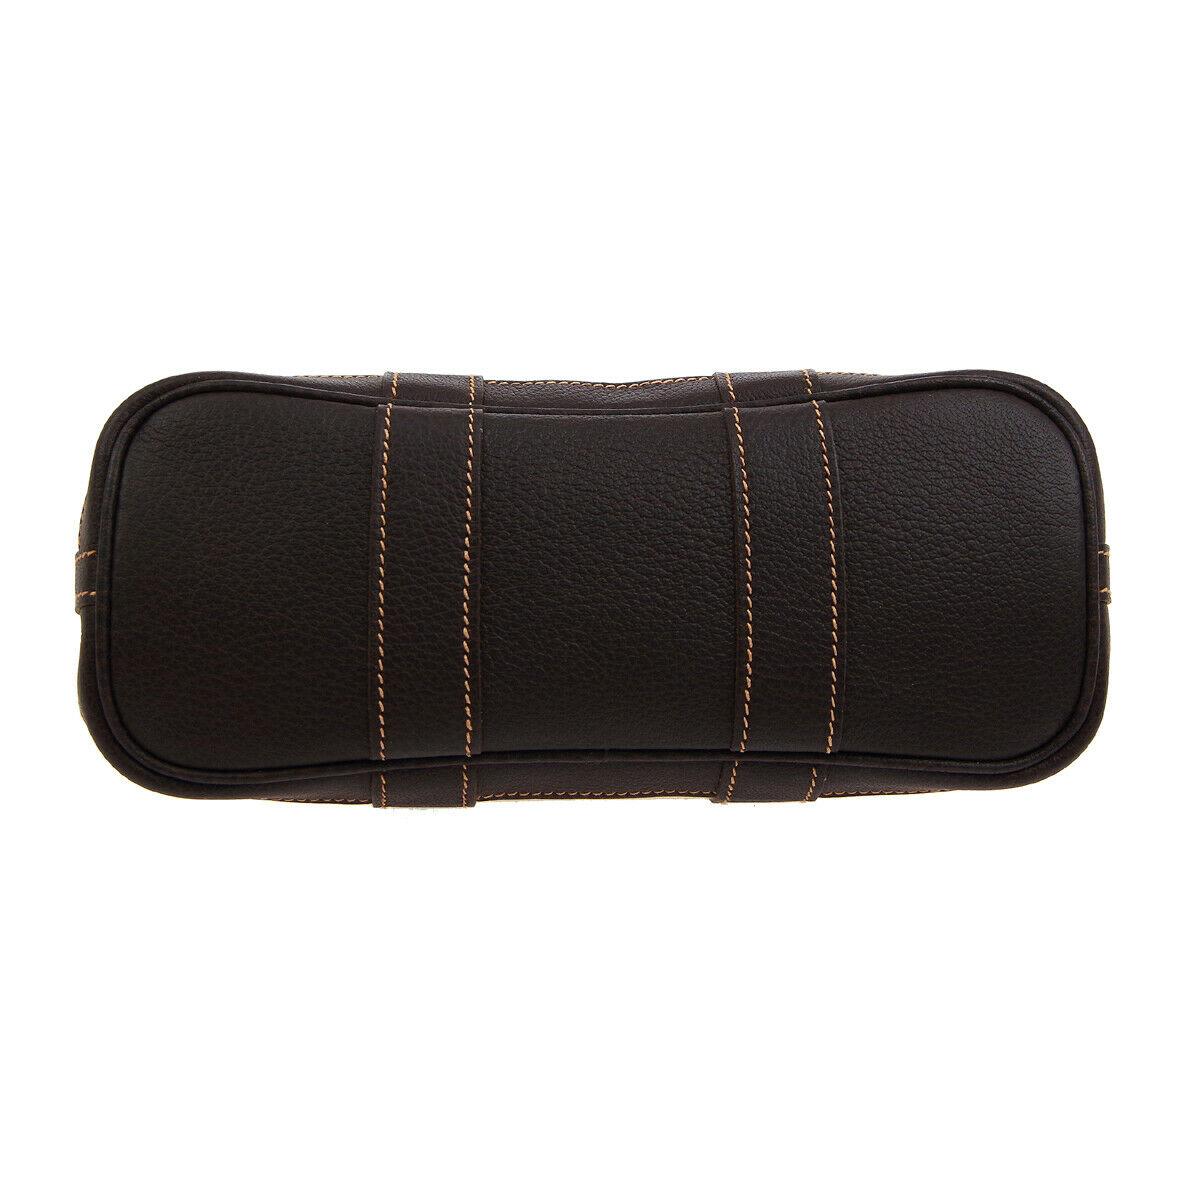 Beige Hermes Tan Canvas Dark Brown Leather Small Mini Evening Clutch Bag in Box 